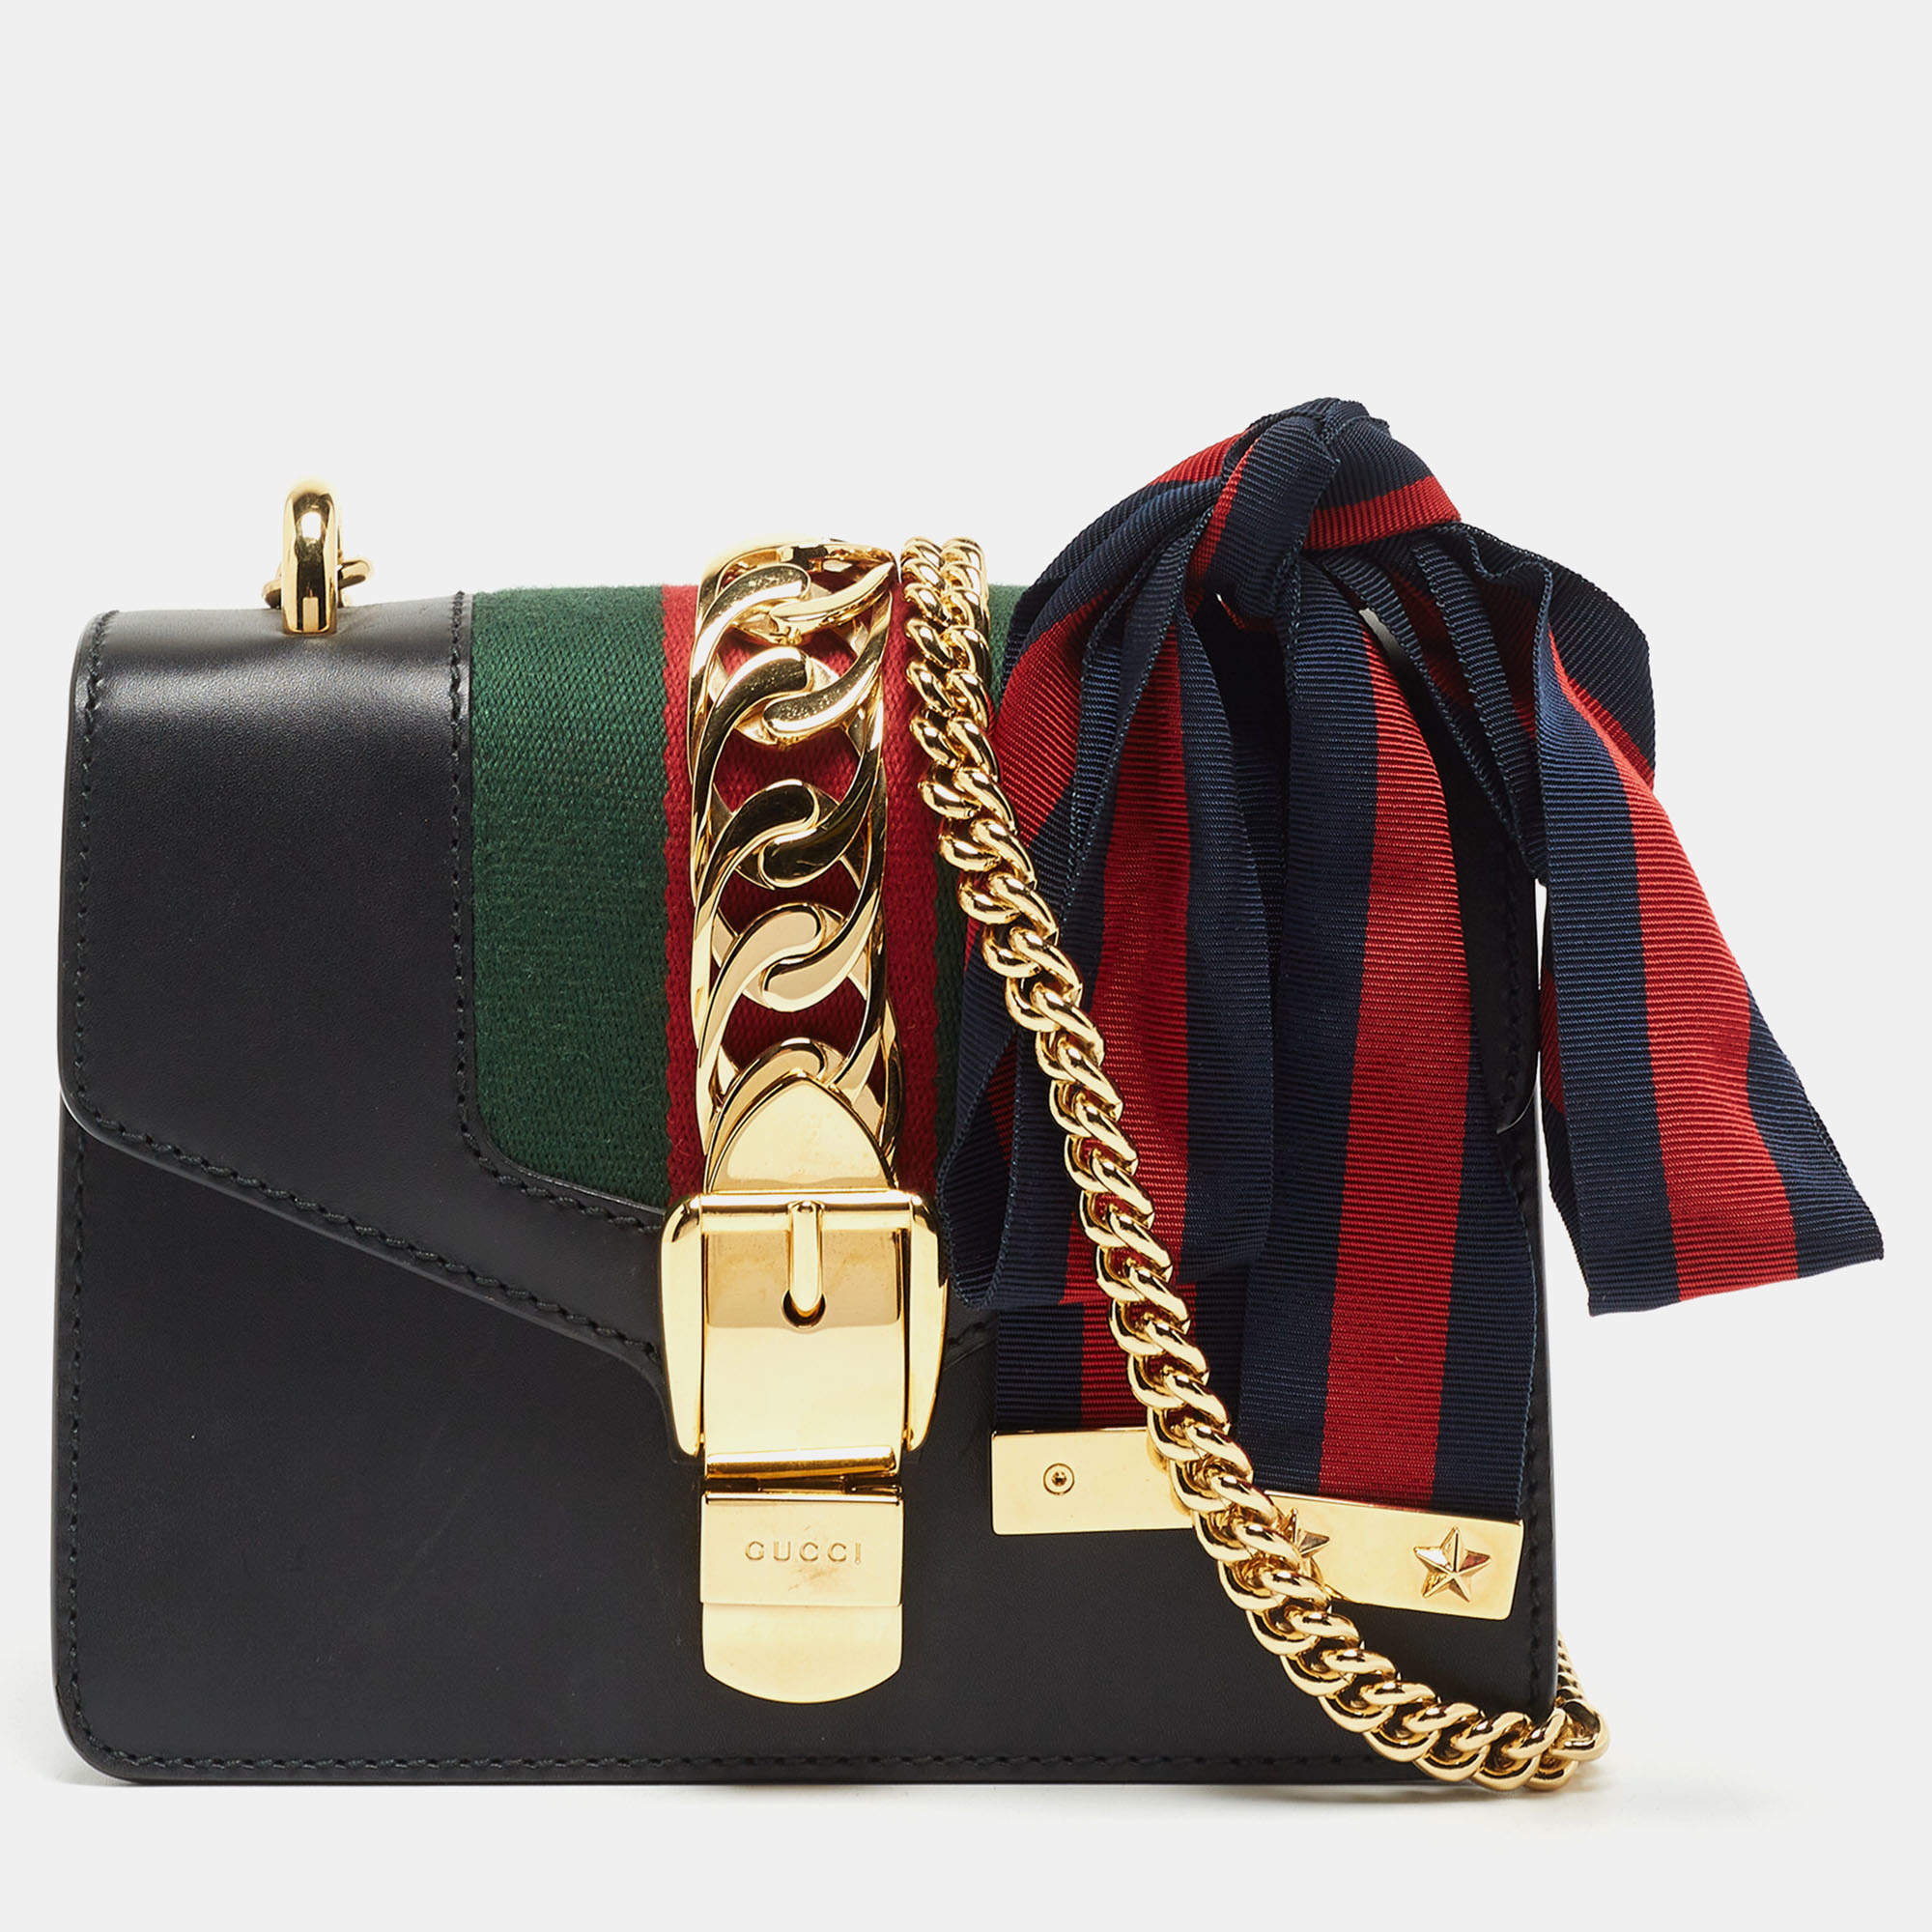 Review of my Designer Luxury Bag Collection - Hermes, Chanel, LV, Gucci,  Prada, Balenciaga, McQueen! 